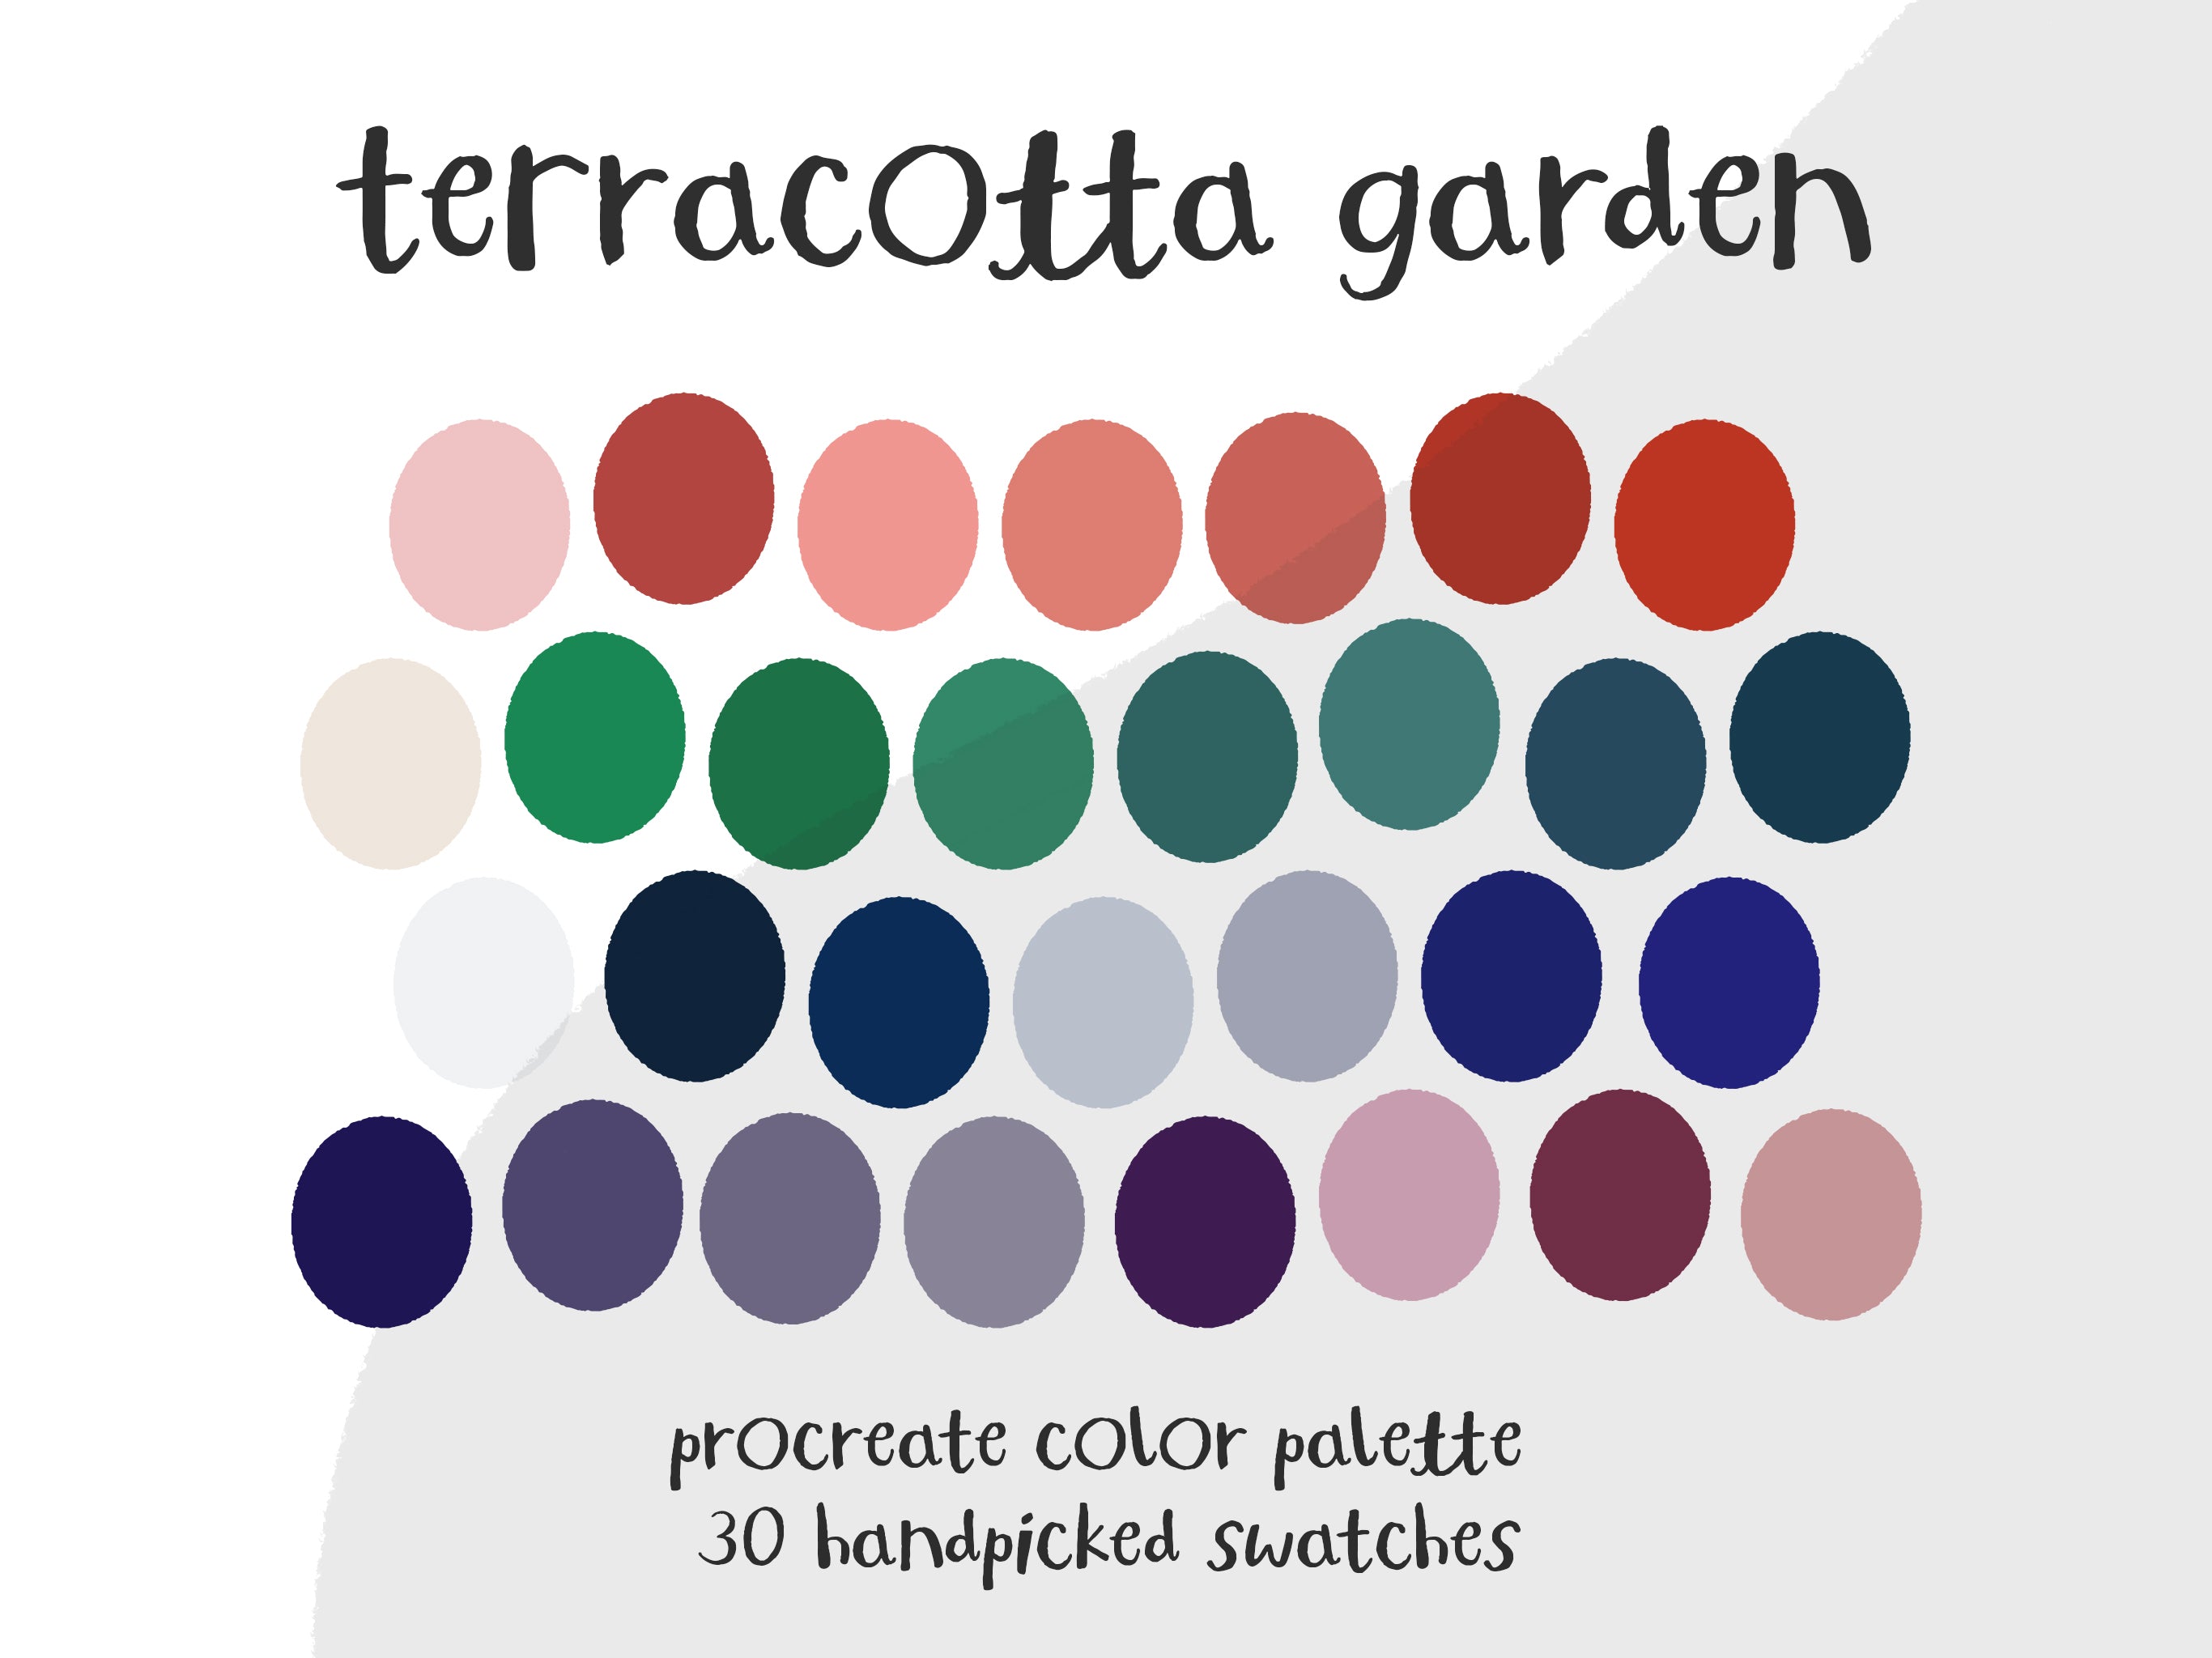 Terracotta Garden